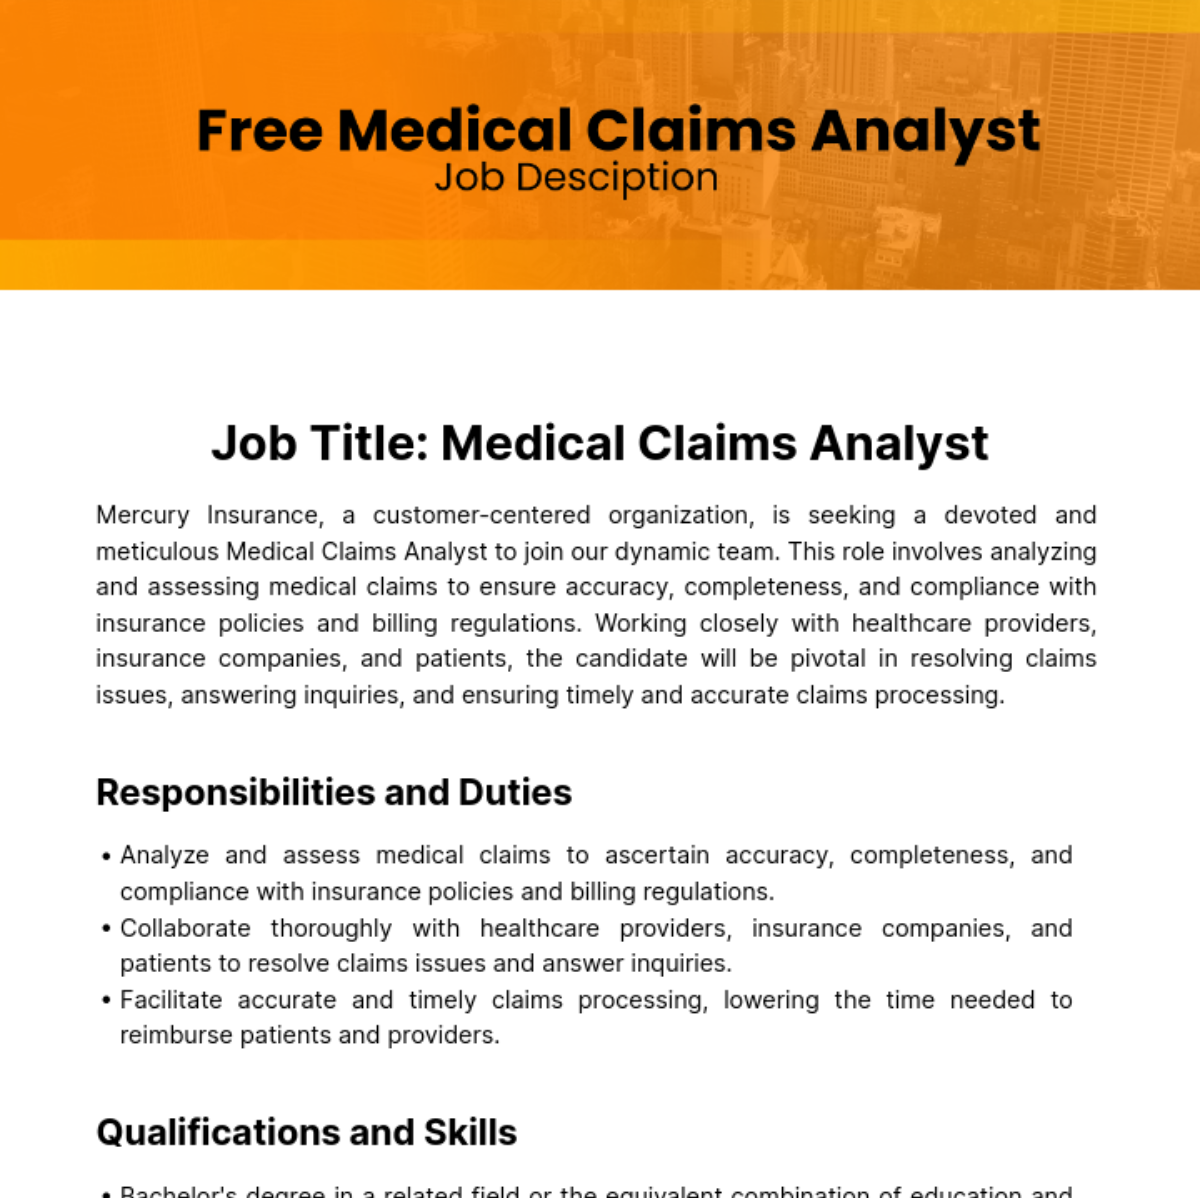 Medical Claims Analyst Job Description Template